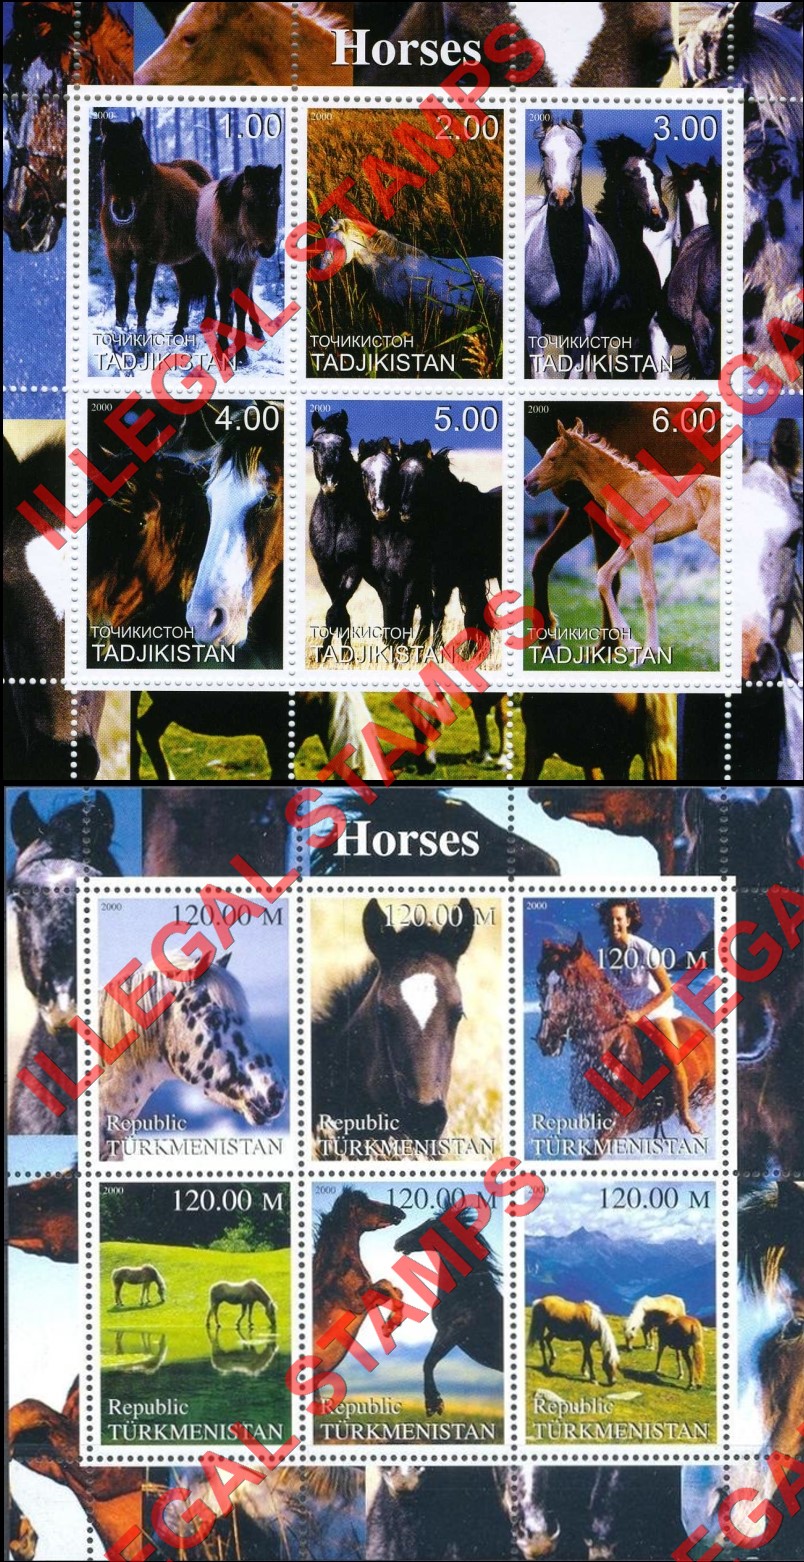 Tajikistan 2000 Horses Illegal Stamp Souvenir Sheets of 6